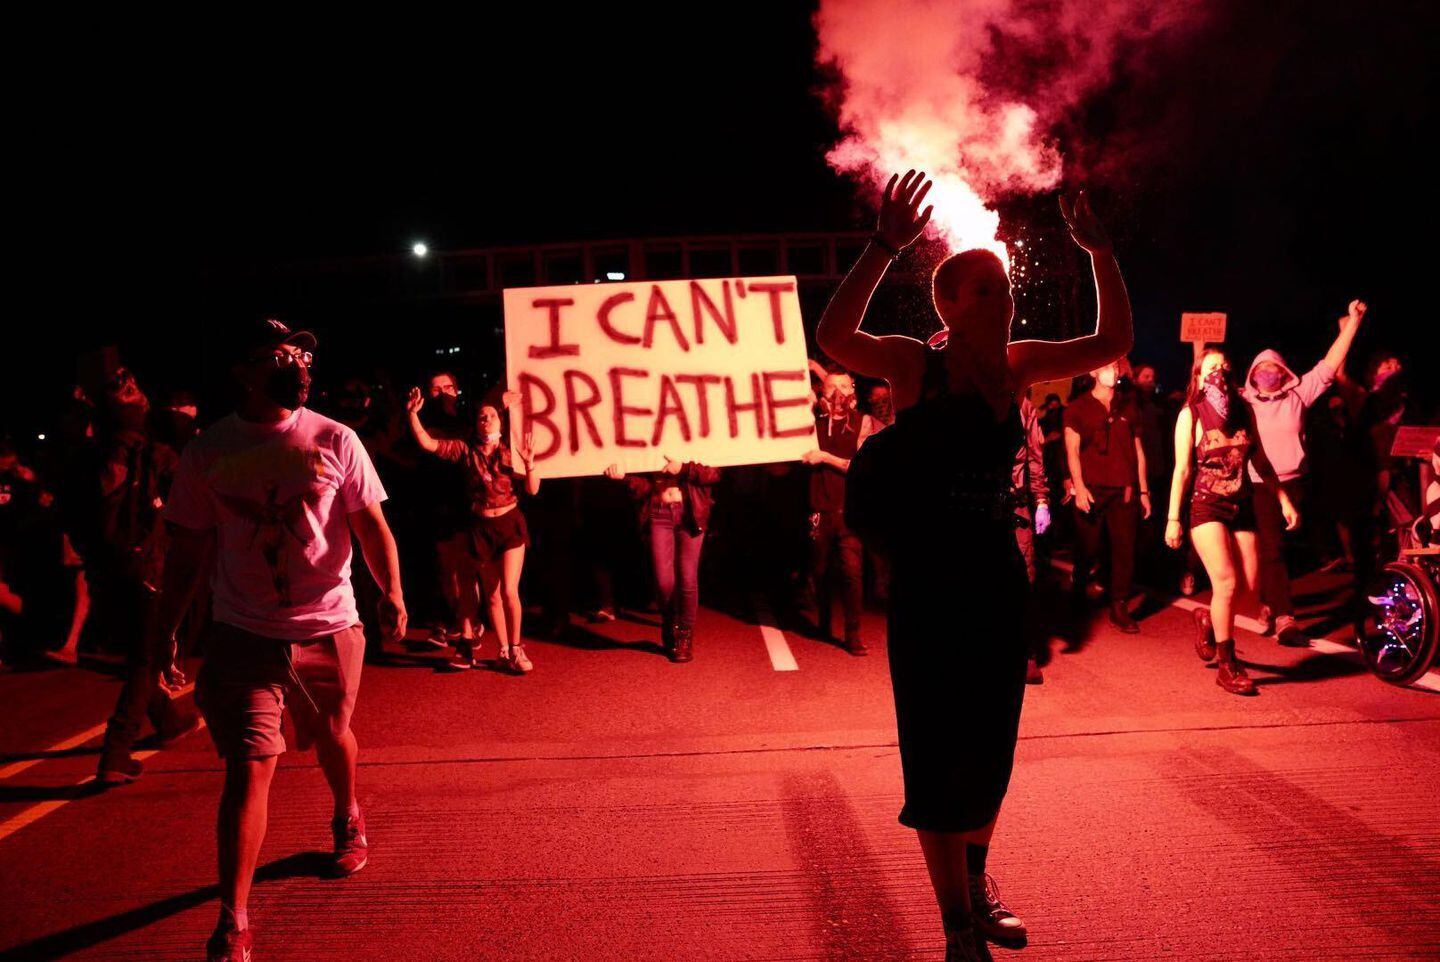 Louis Vuitton (Portland Oregon Riots) : r/pics